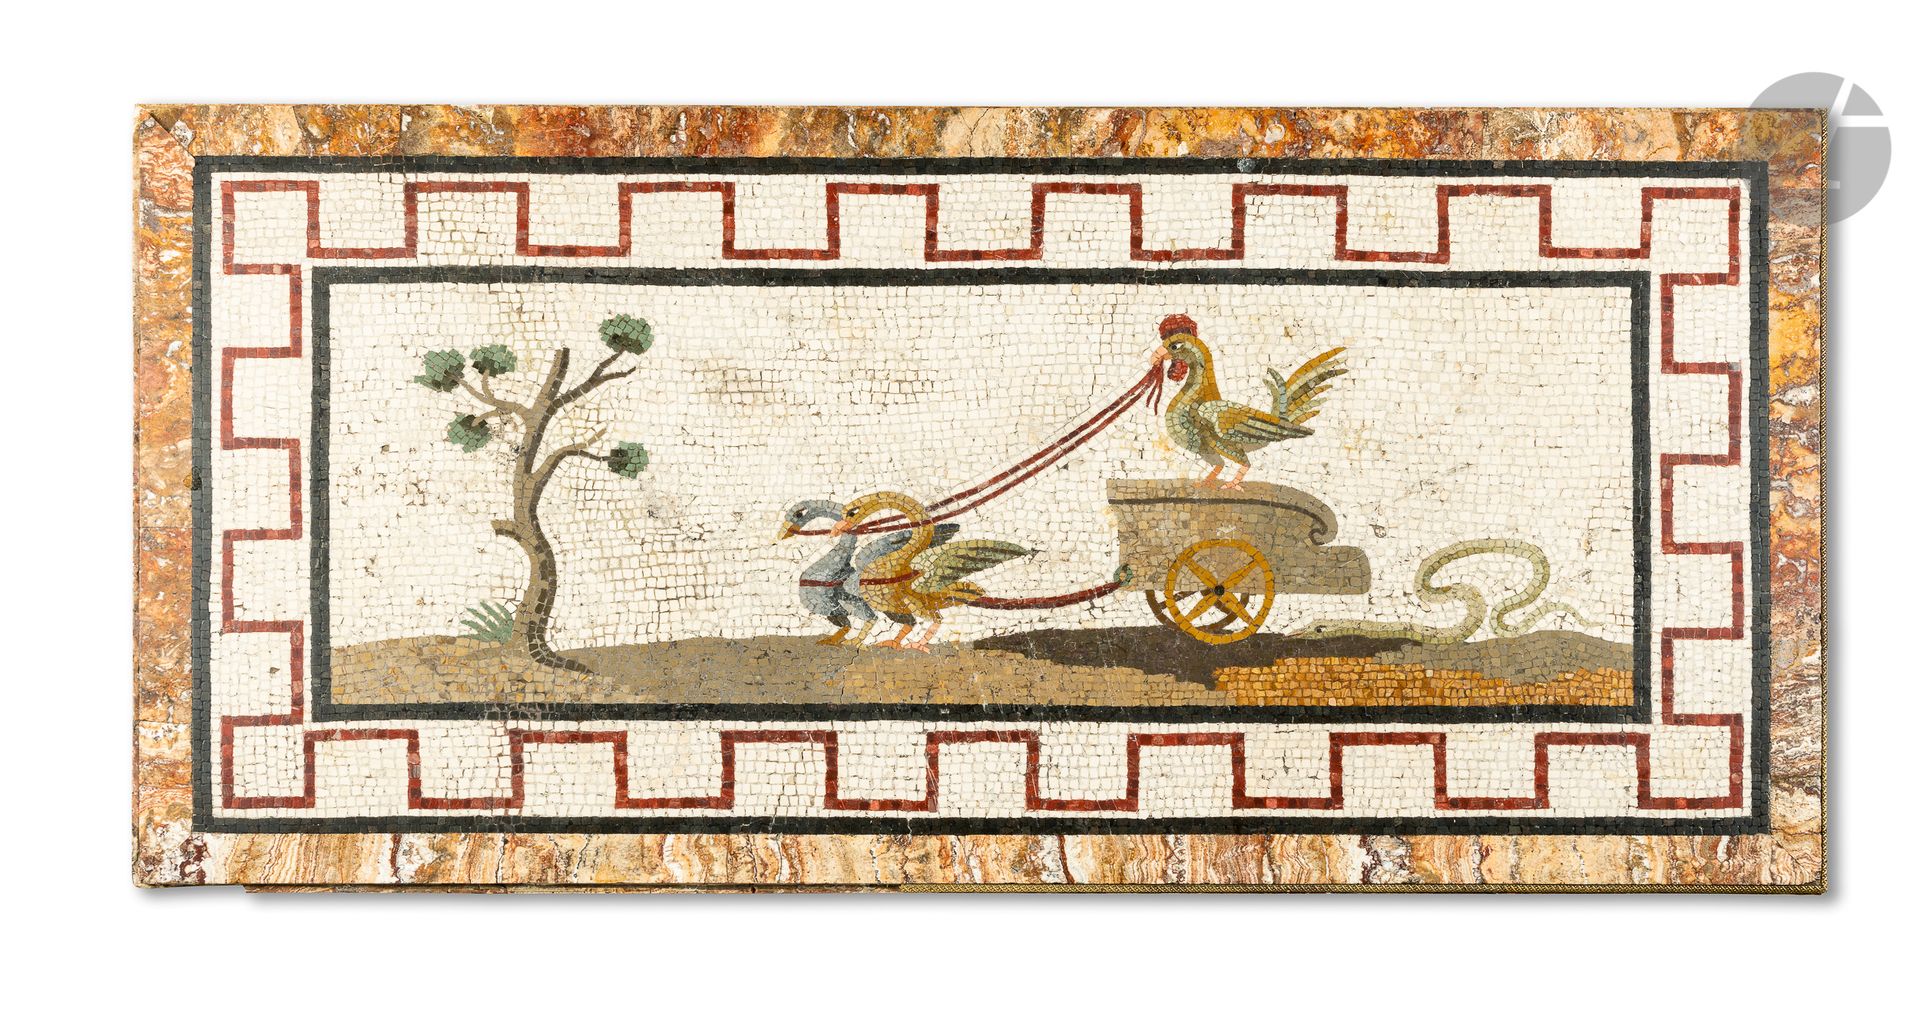 Null 长方形马赛克，显示两只手掌拉着一只由公鸡带领、被
蛇
追赶的大马车
石质魔方19
世纪，1-2世纪的罗马风格118
x 59厘米